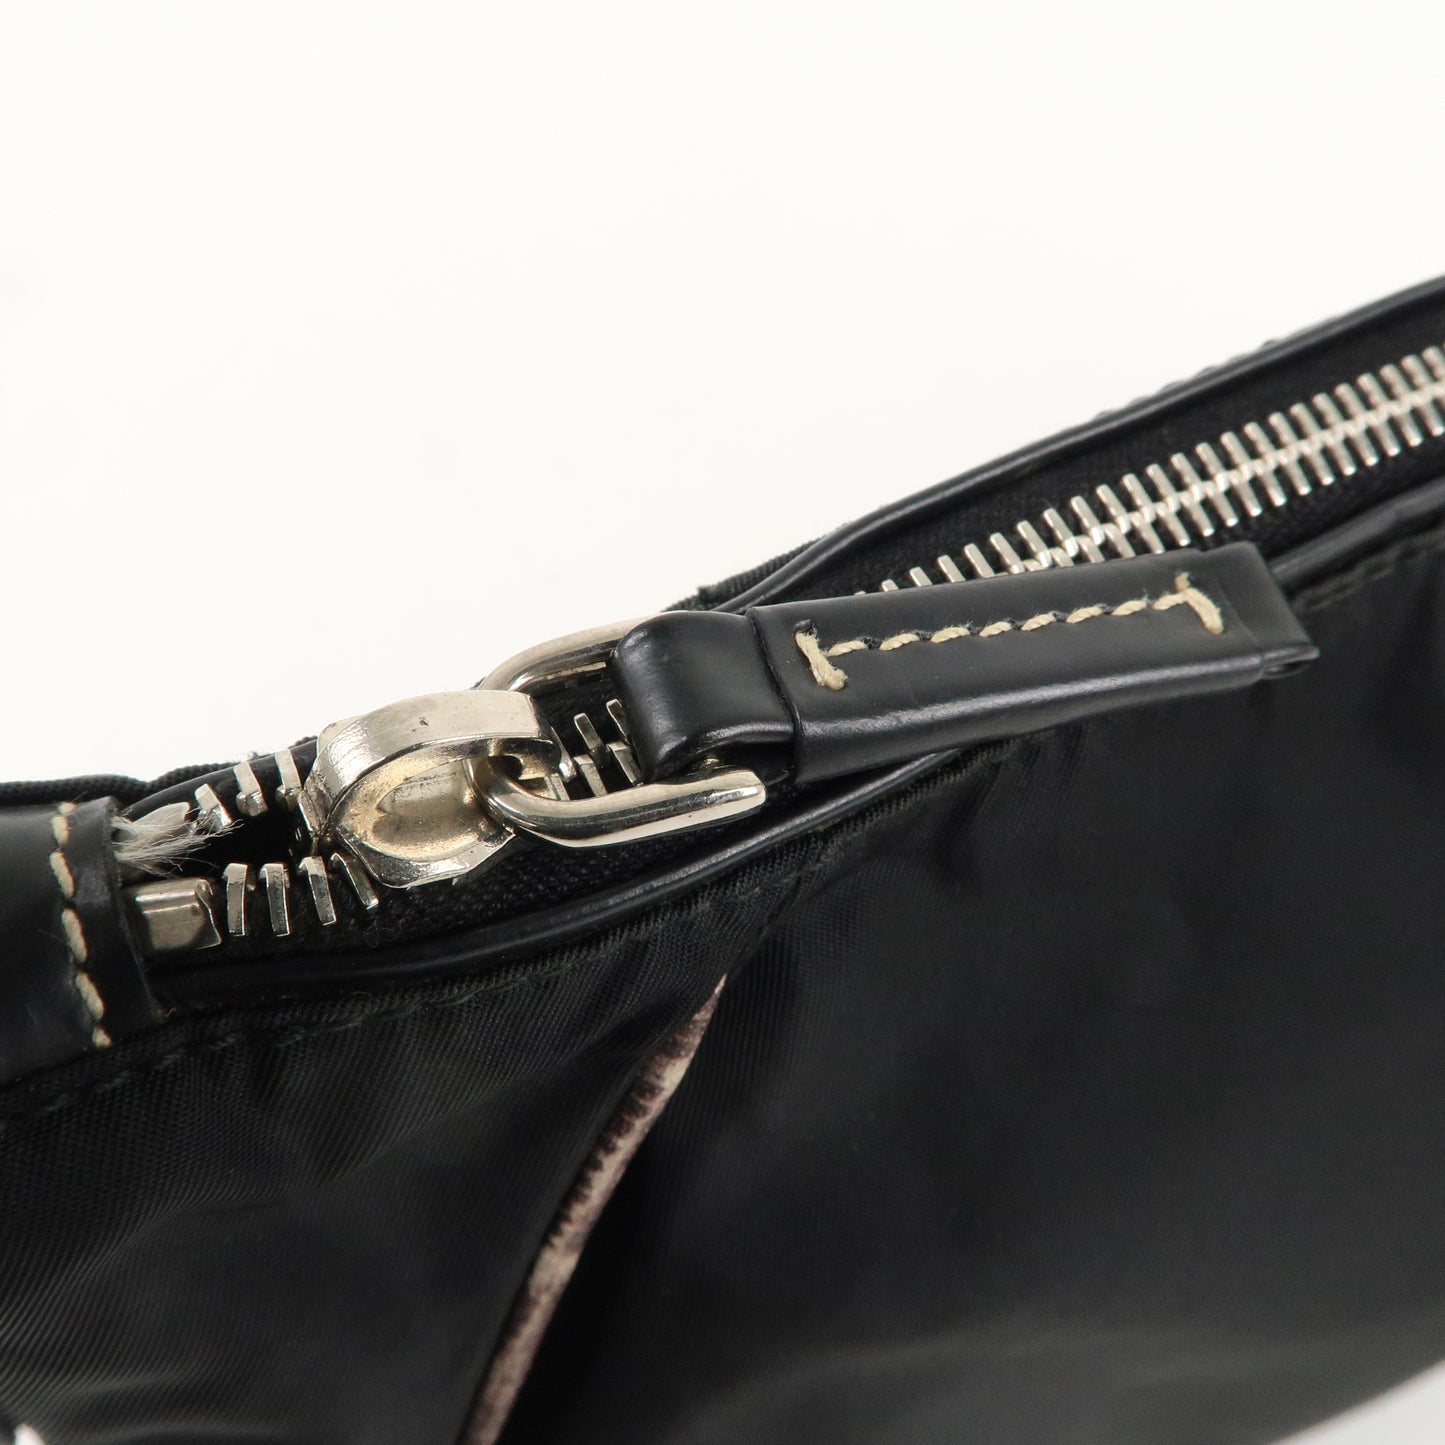 PRADA Nylon Leather One Shoulder Bag NERO Black